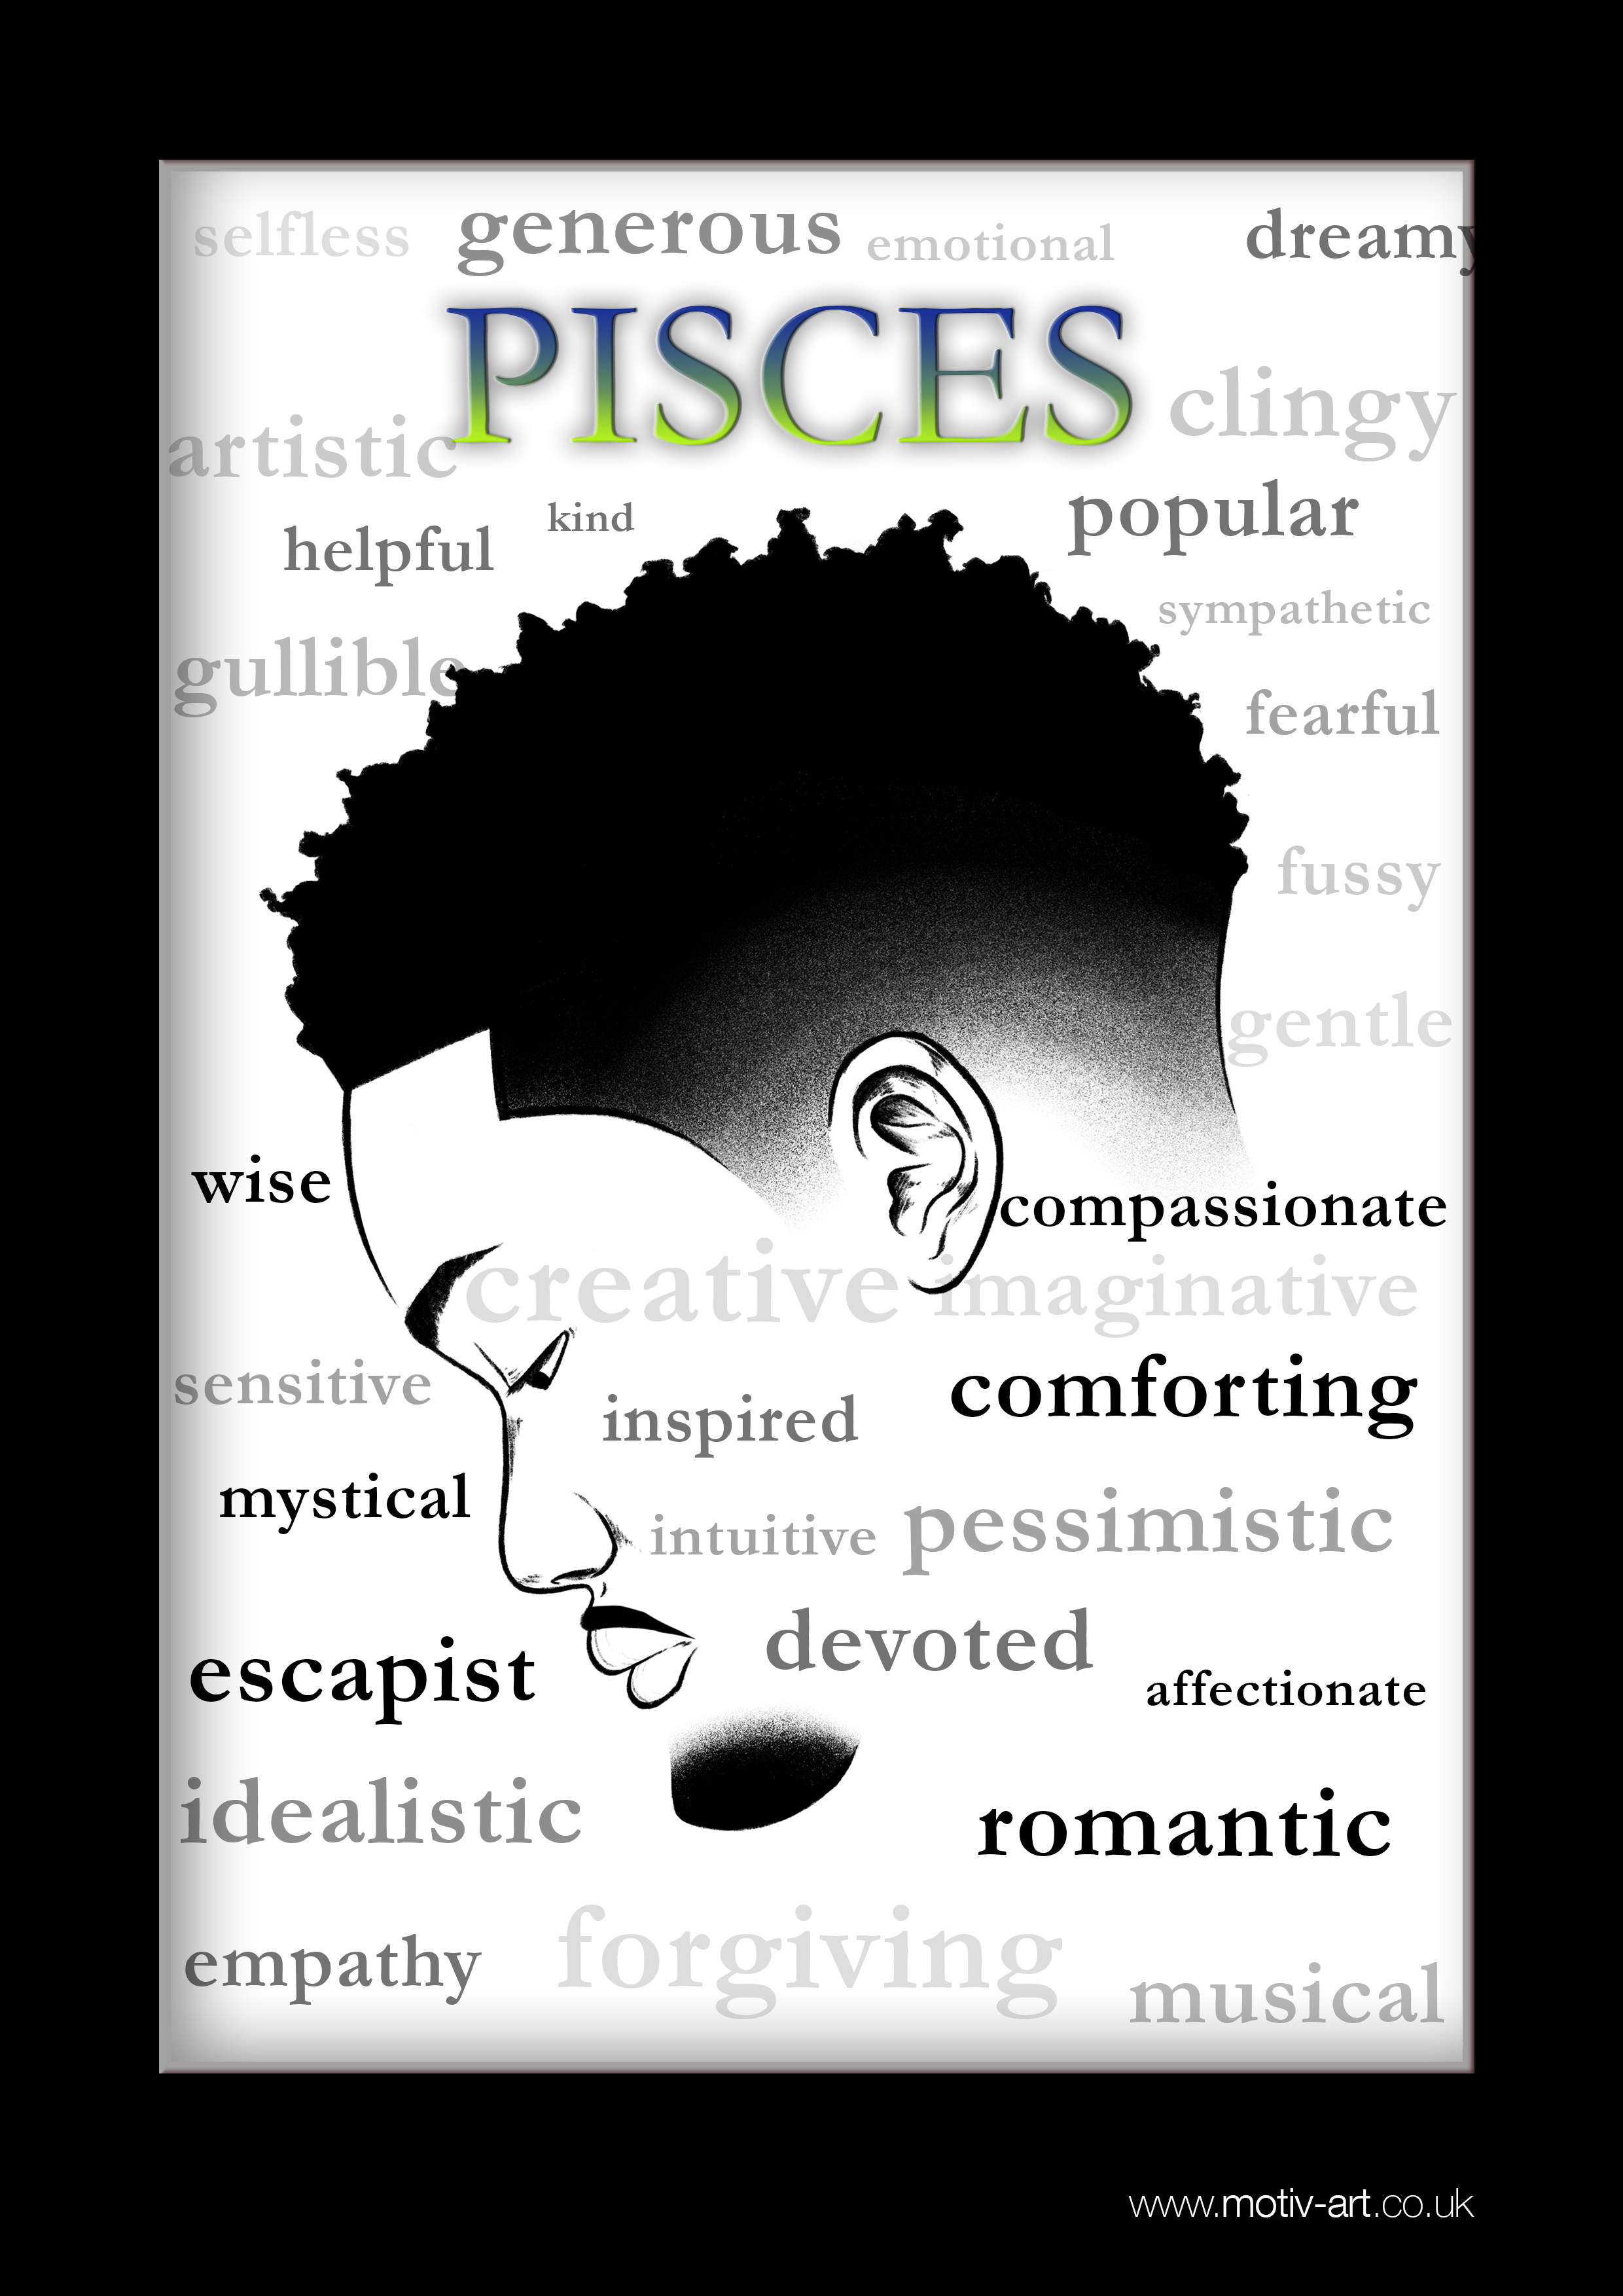 Pisces - 20 Feb - 20 Mar